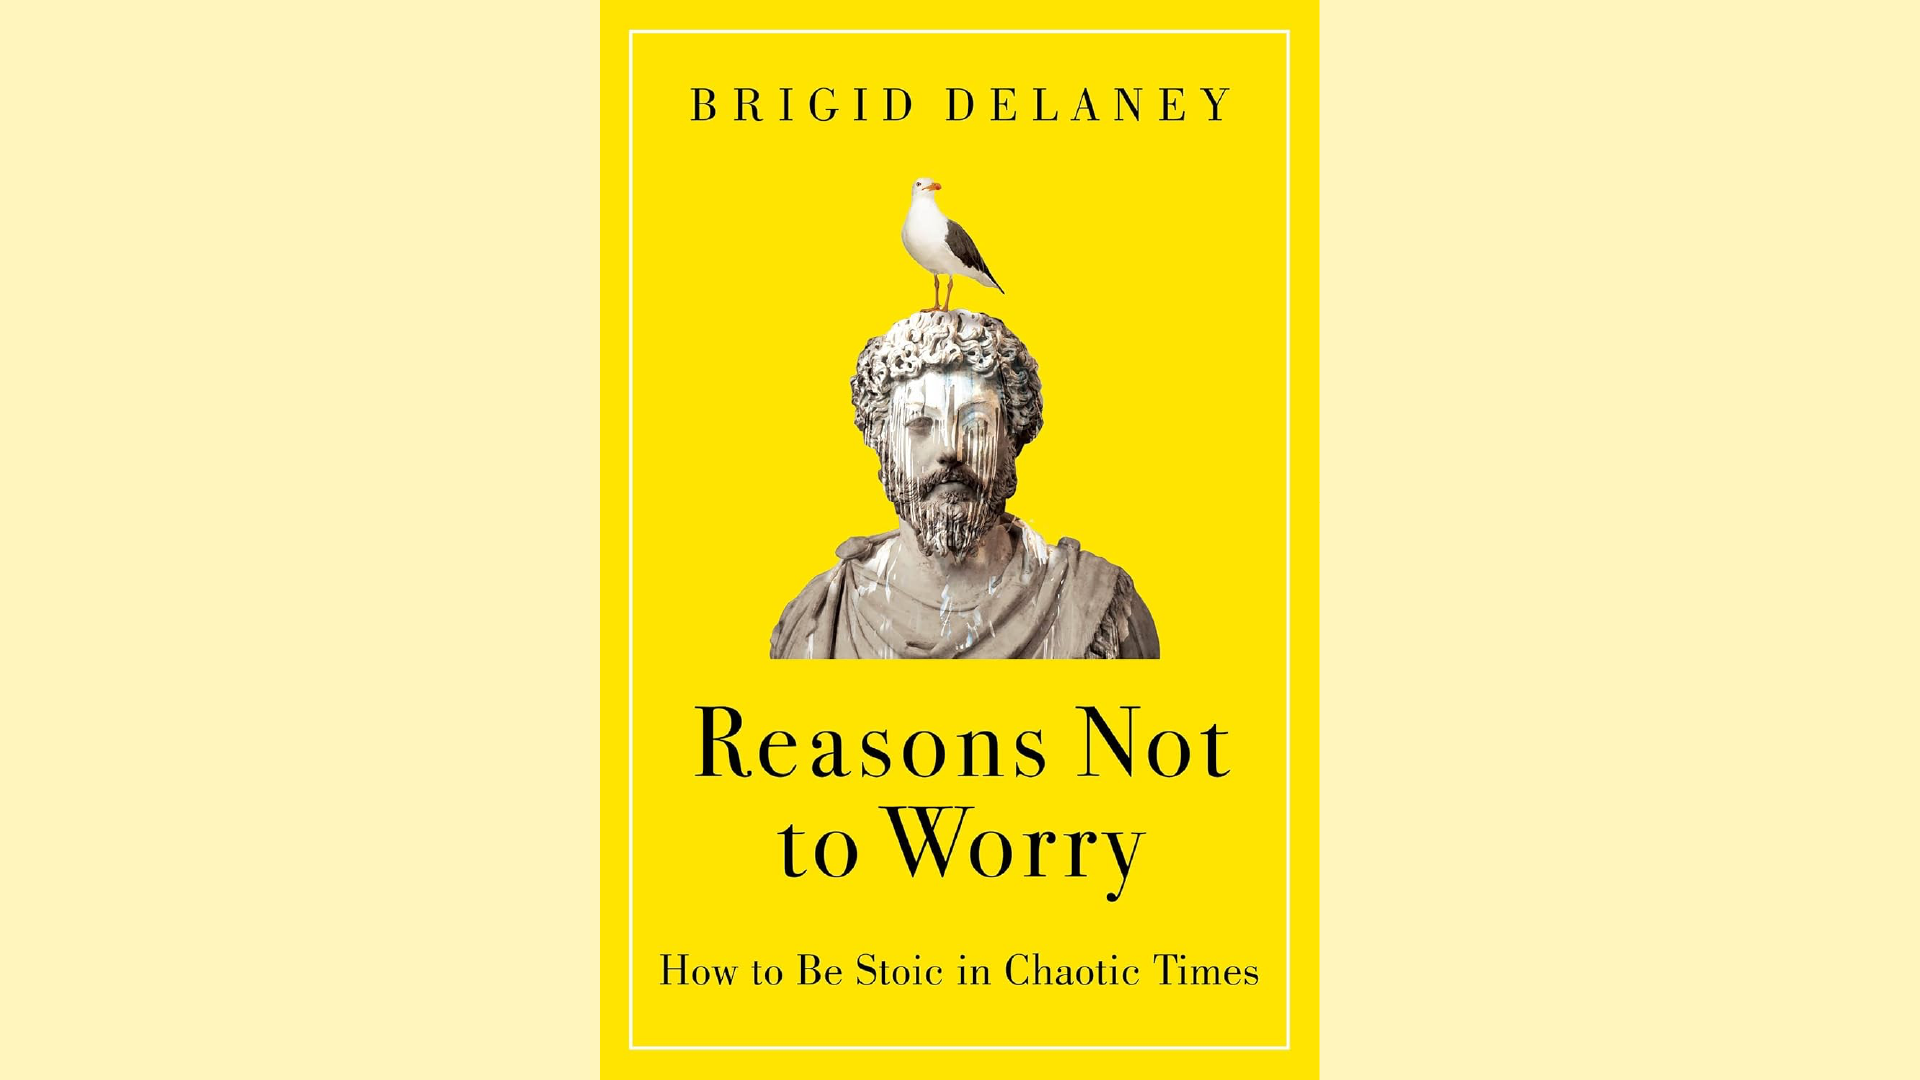 Summary: Reasons Not to Worry by Brigid Delaney